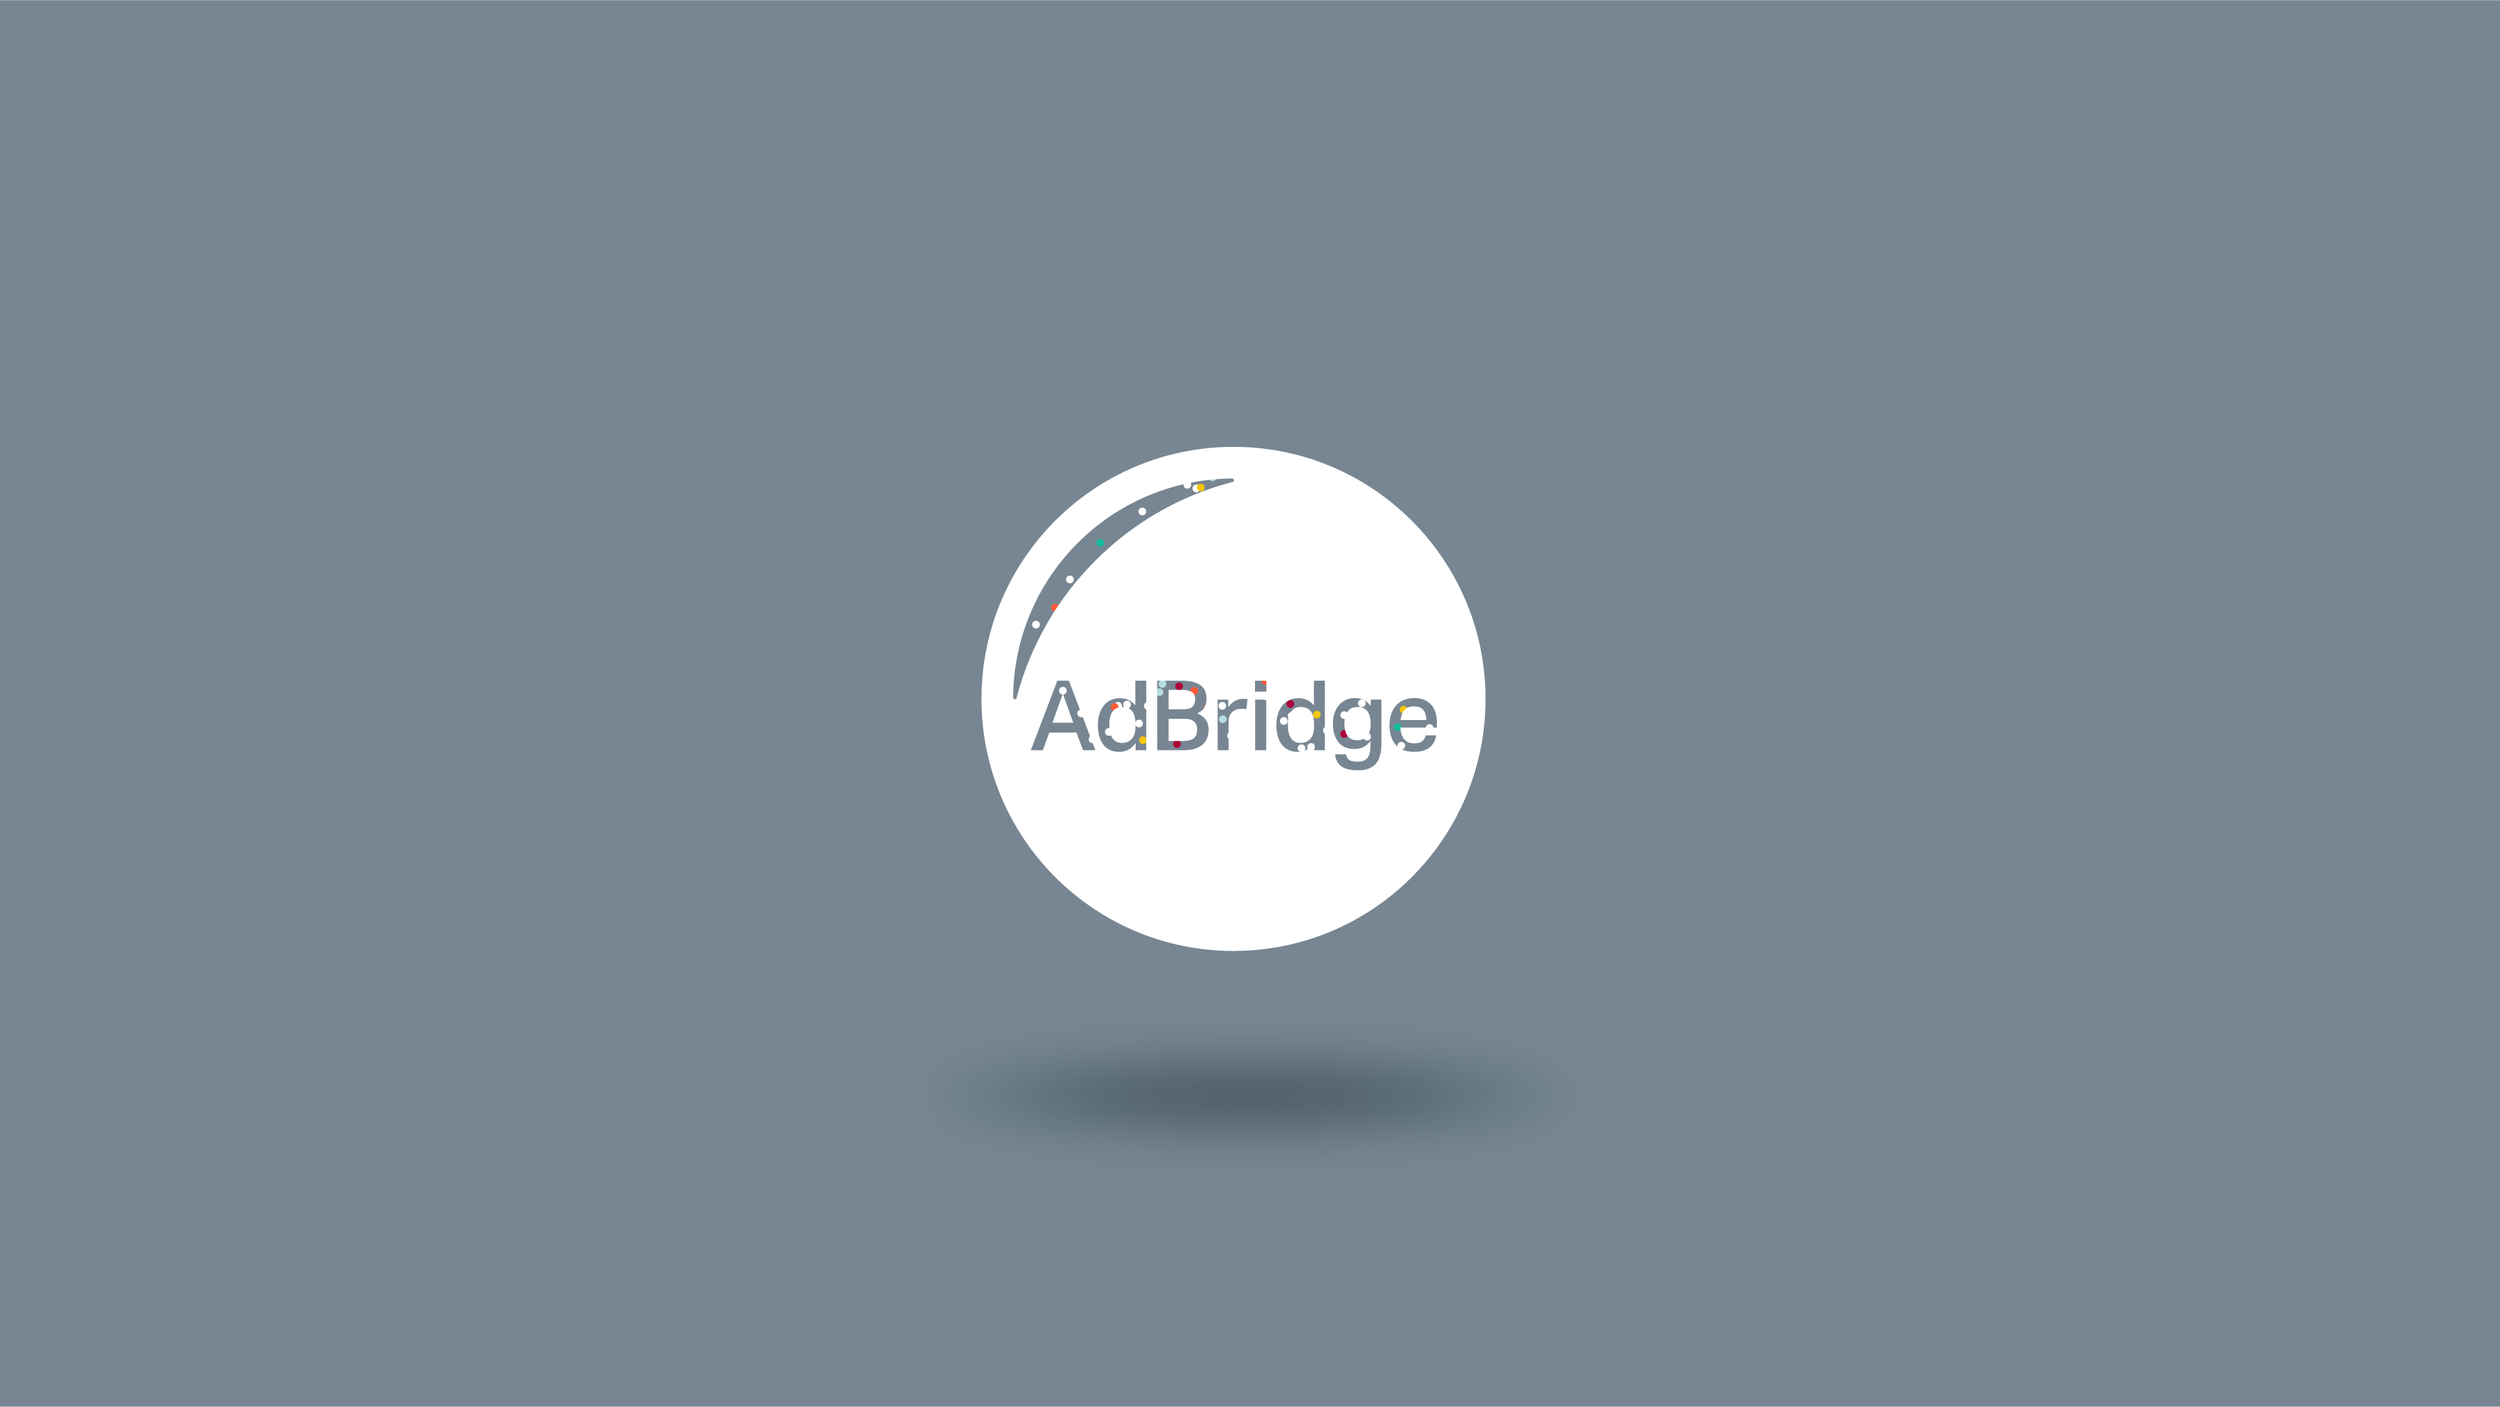 adbridge_art-boards_1-03.png